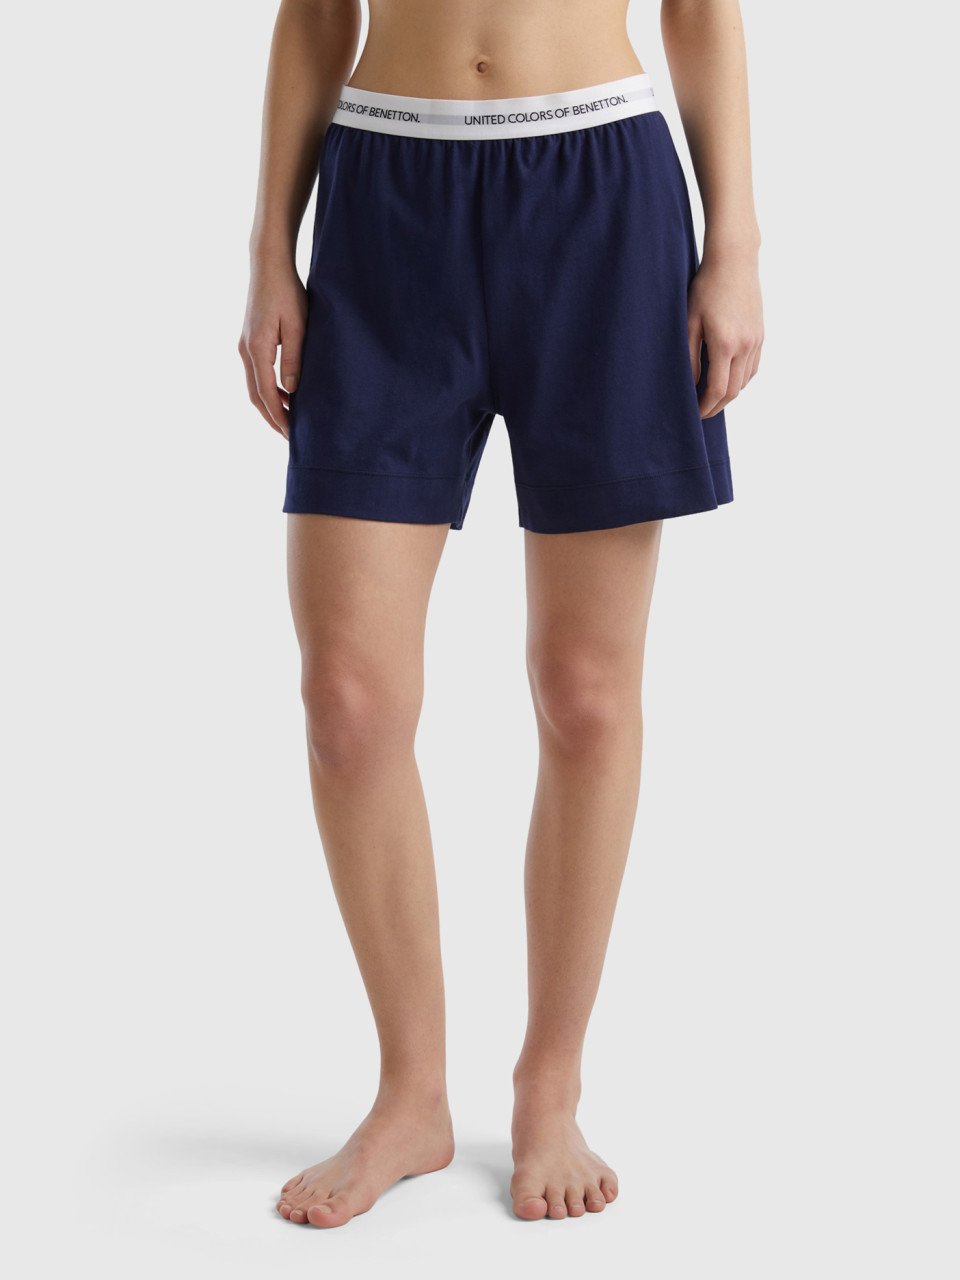 Benetton, Shorts With Logo Elastic, Dark Blue, Women